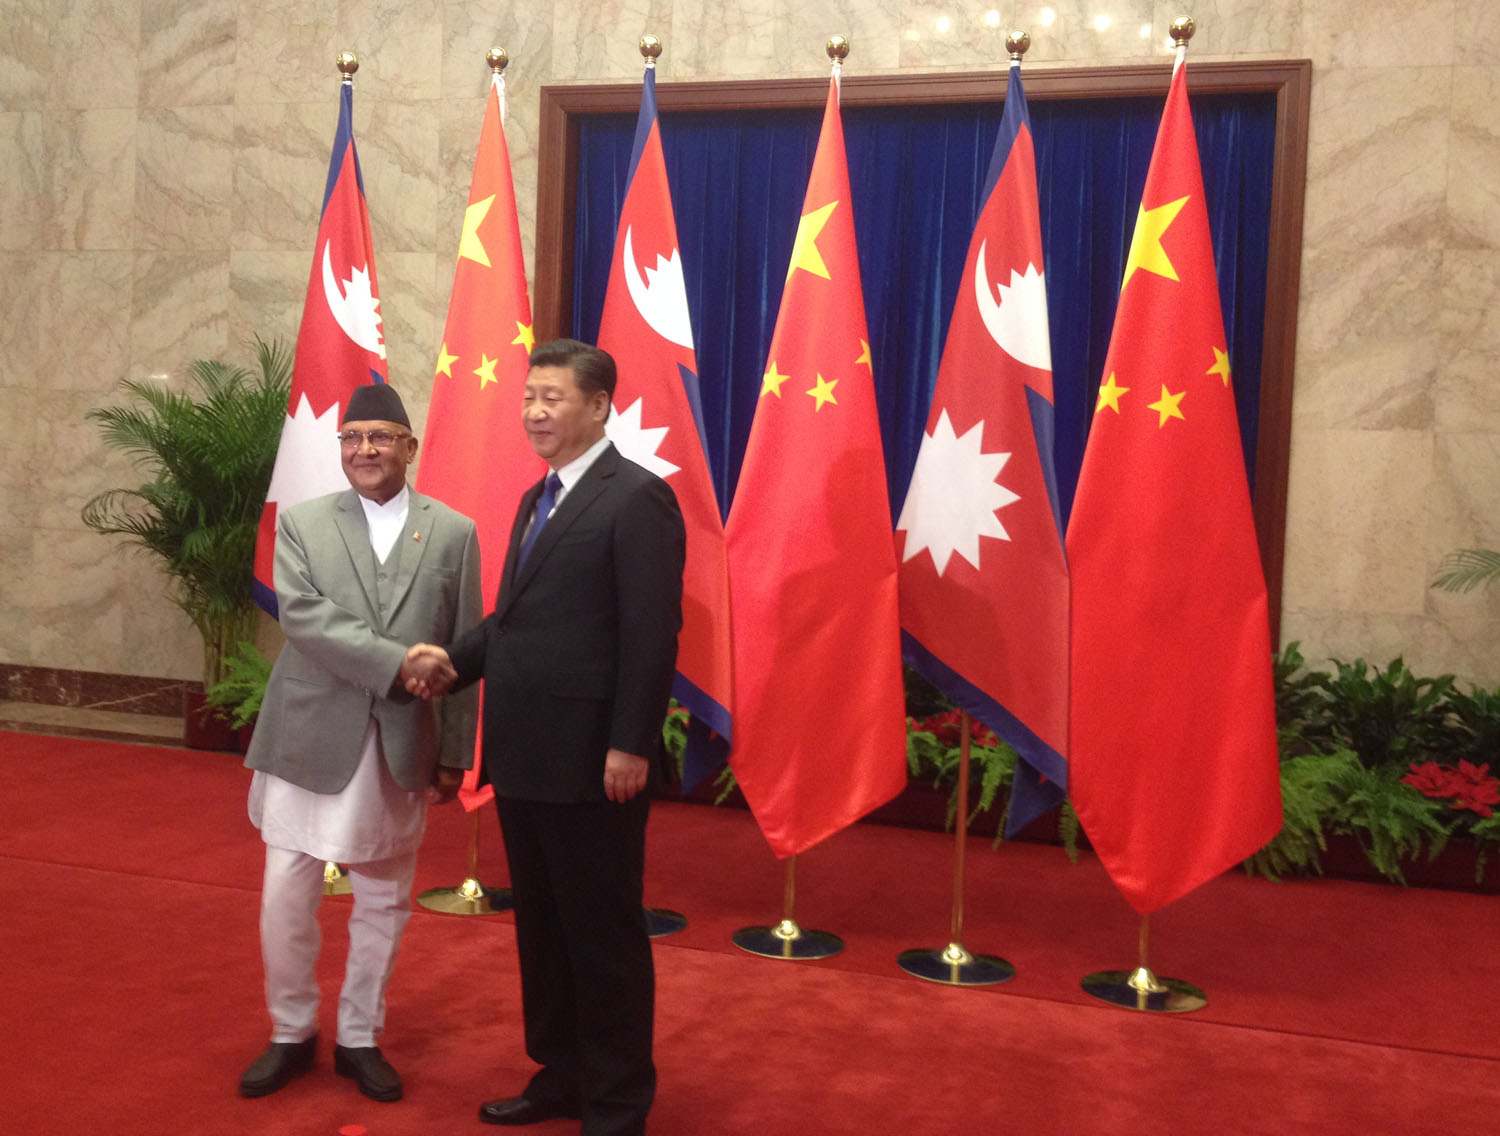 PM Oli and Chinese President Xi meet